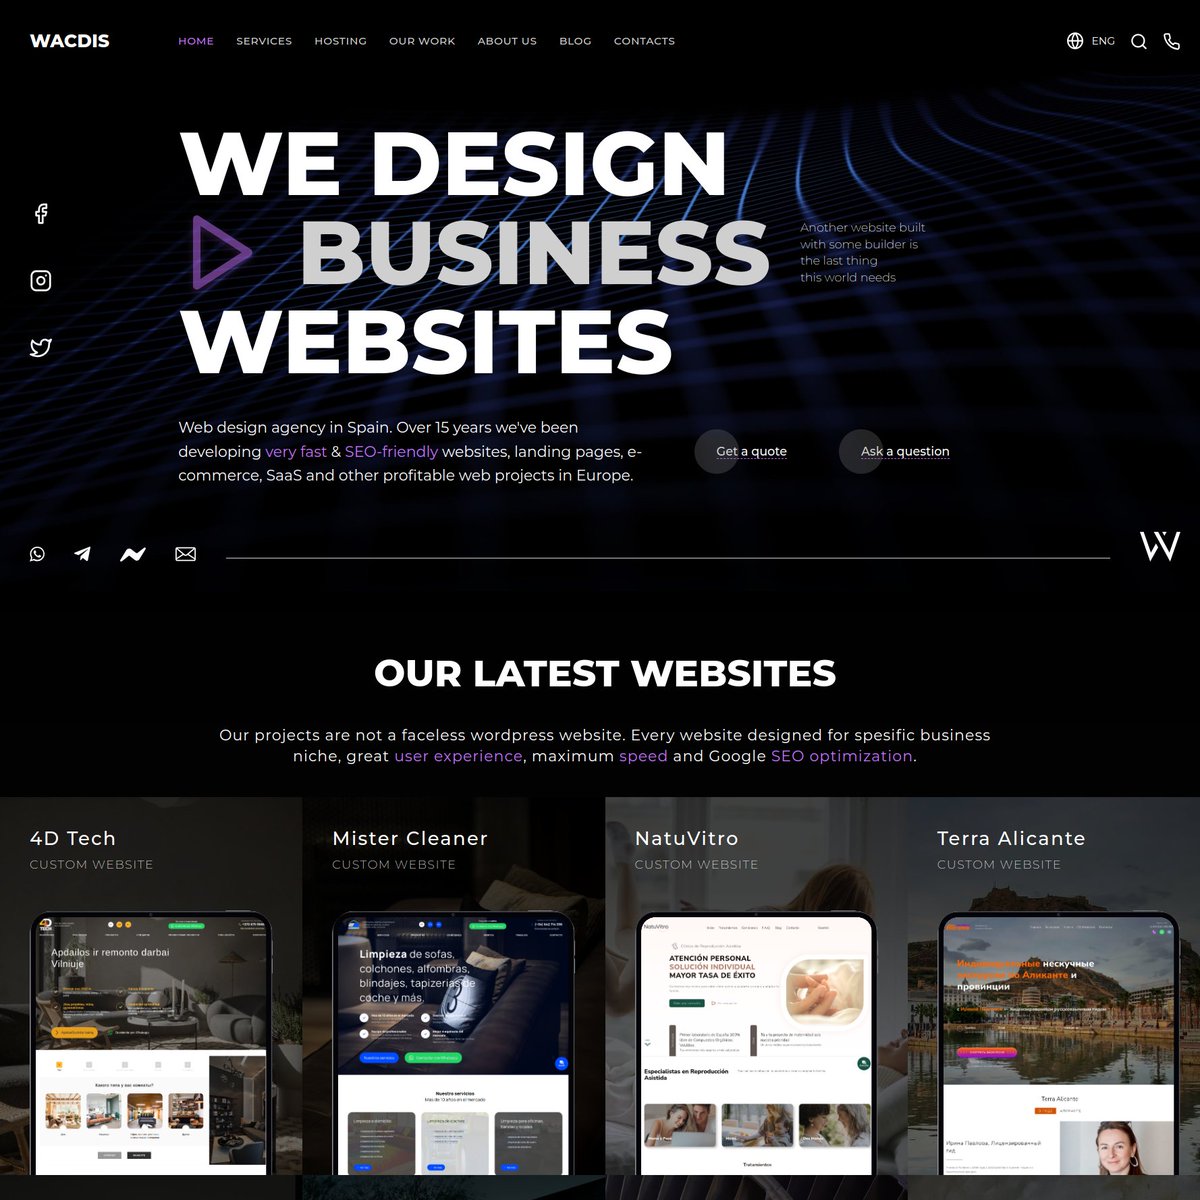 Gonna start my new web design services personal website. Check back soon! 😜

#Entrepreneur #Entrepreneurship #webdesign #webagency #webdesigner #webdeveloper #newwebsite #agencywebsite